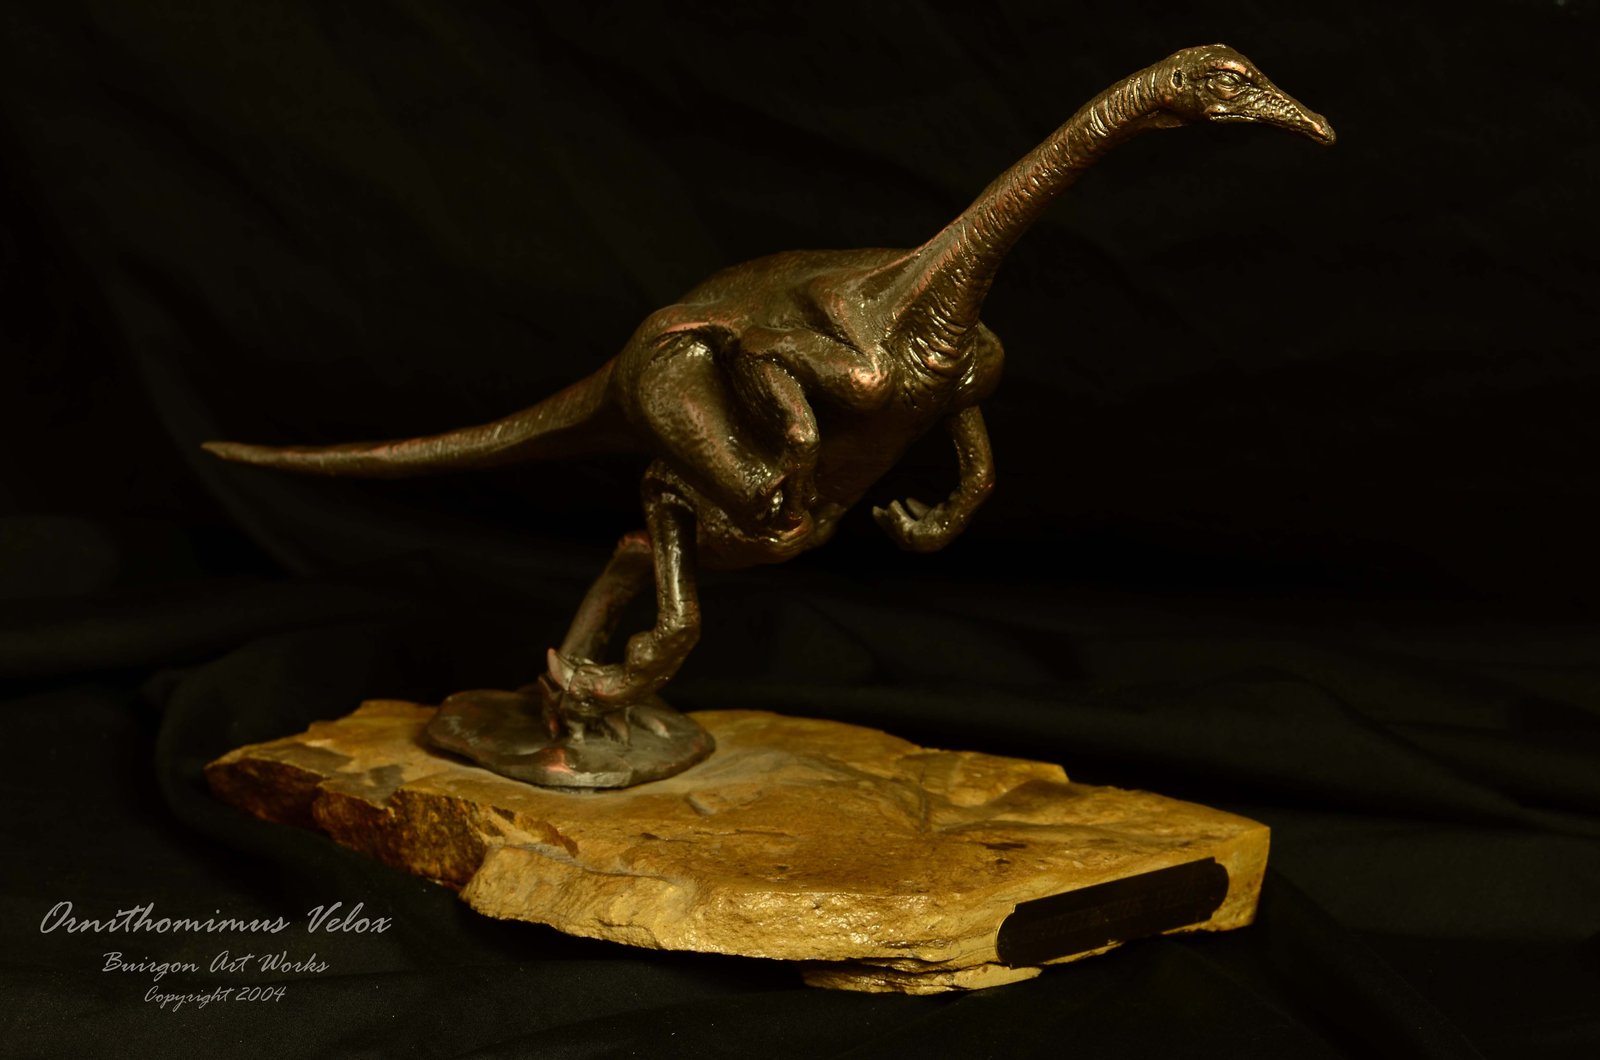 Ornithomimus Velox